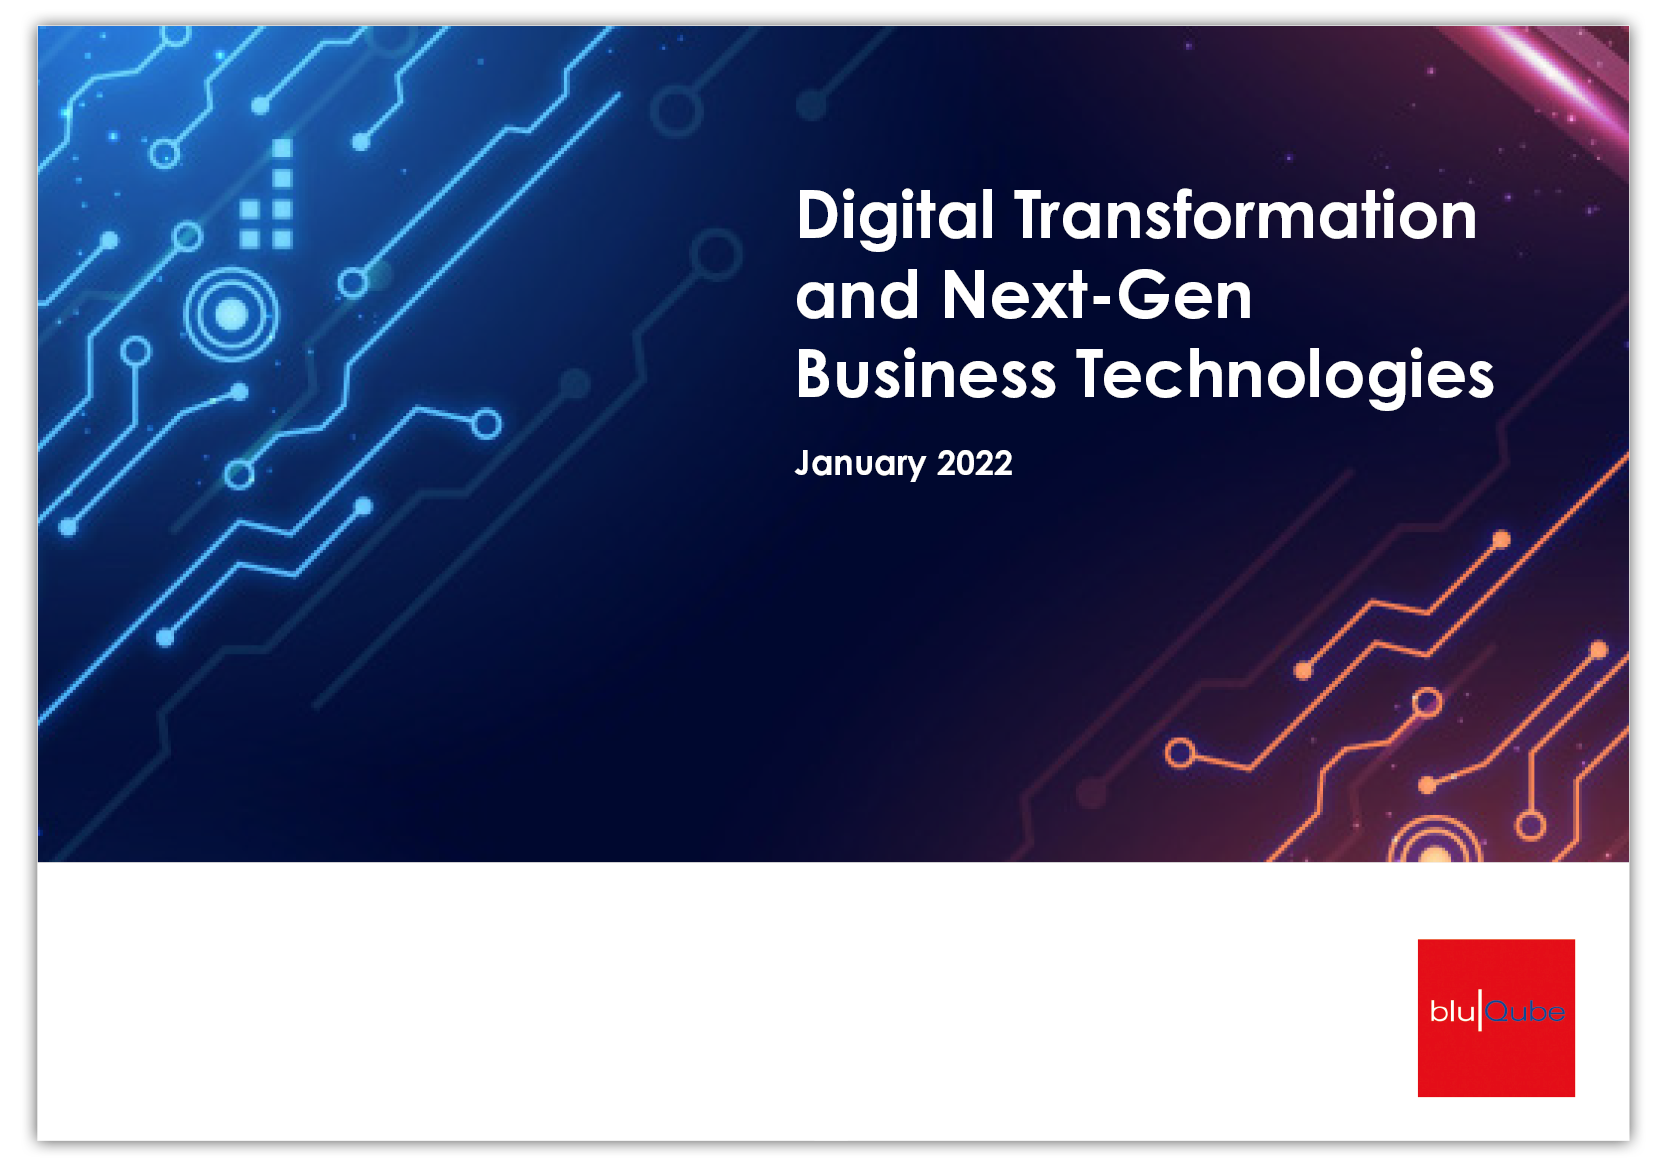 Digital transformation webinar